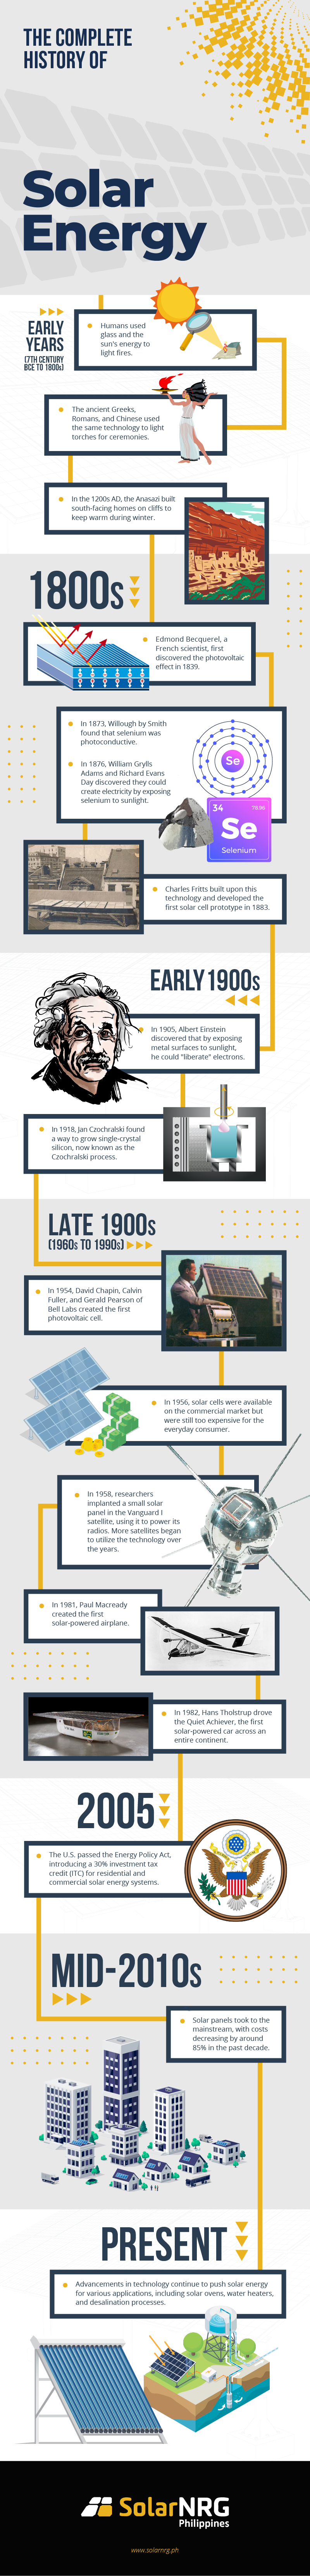 history of solar energy